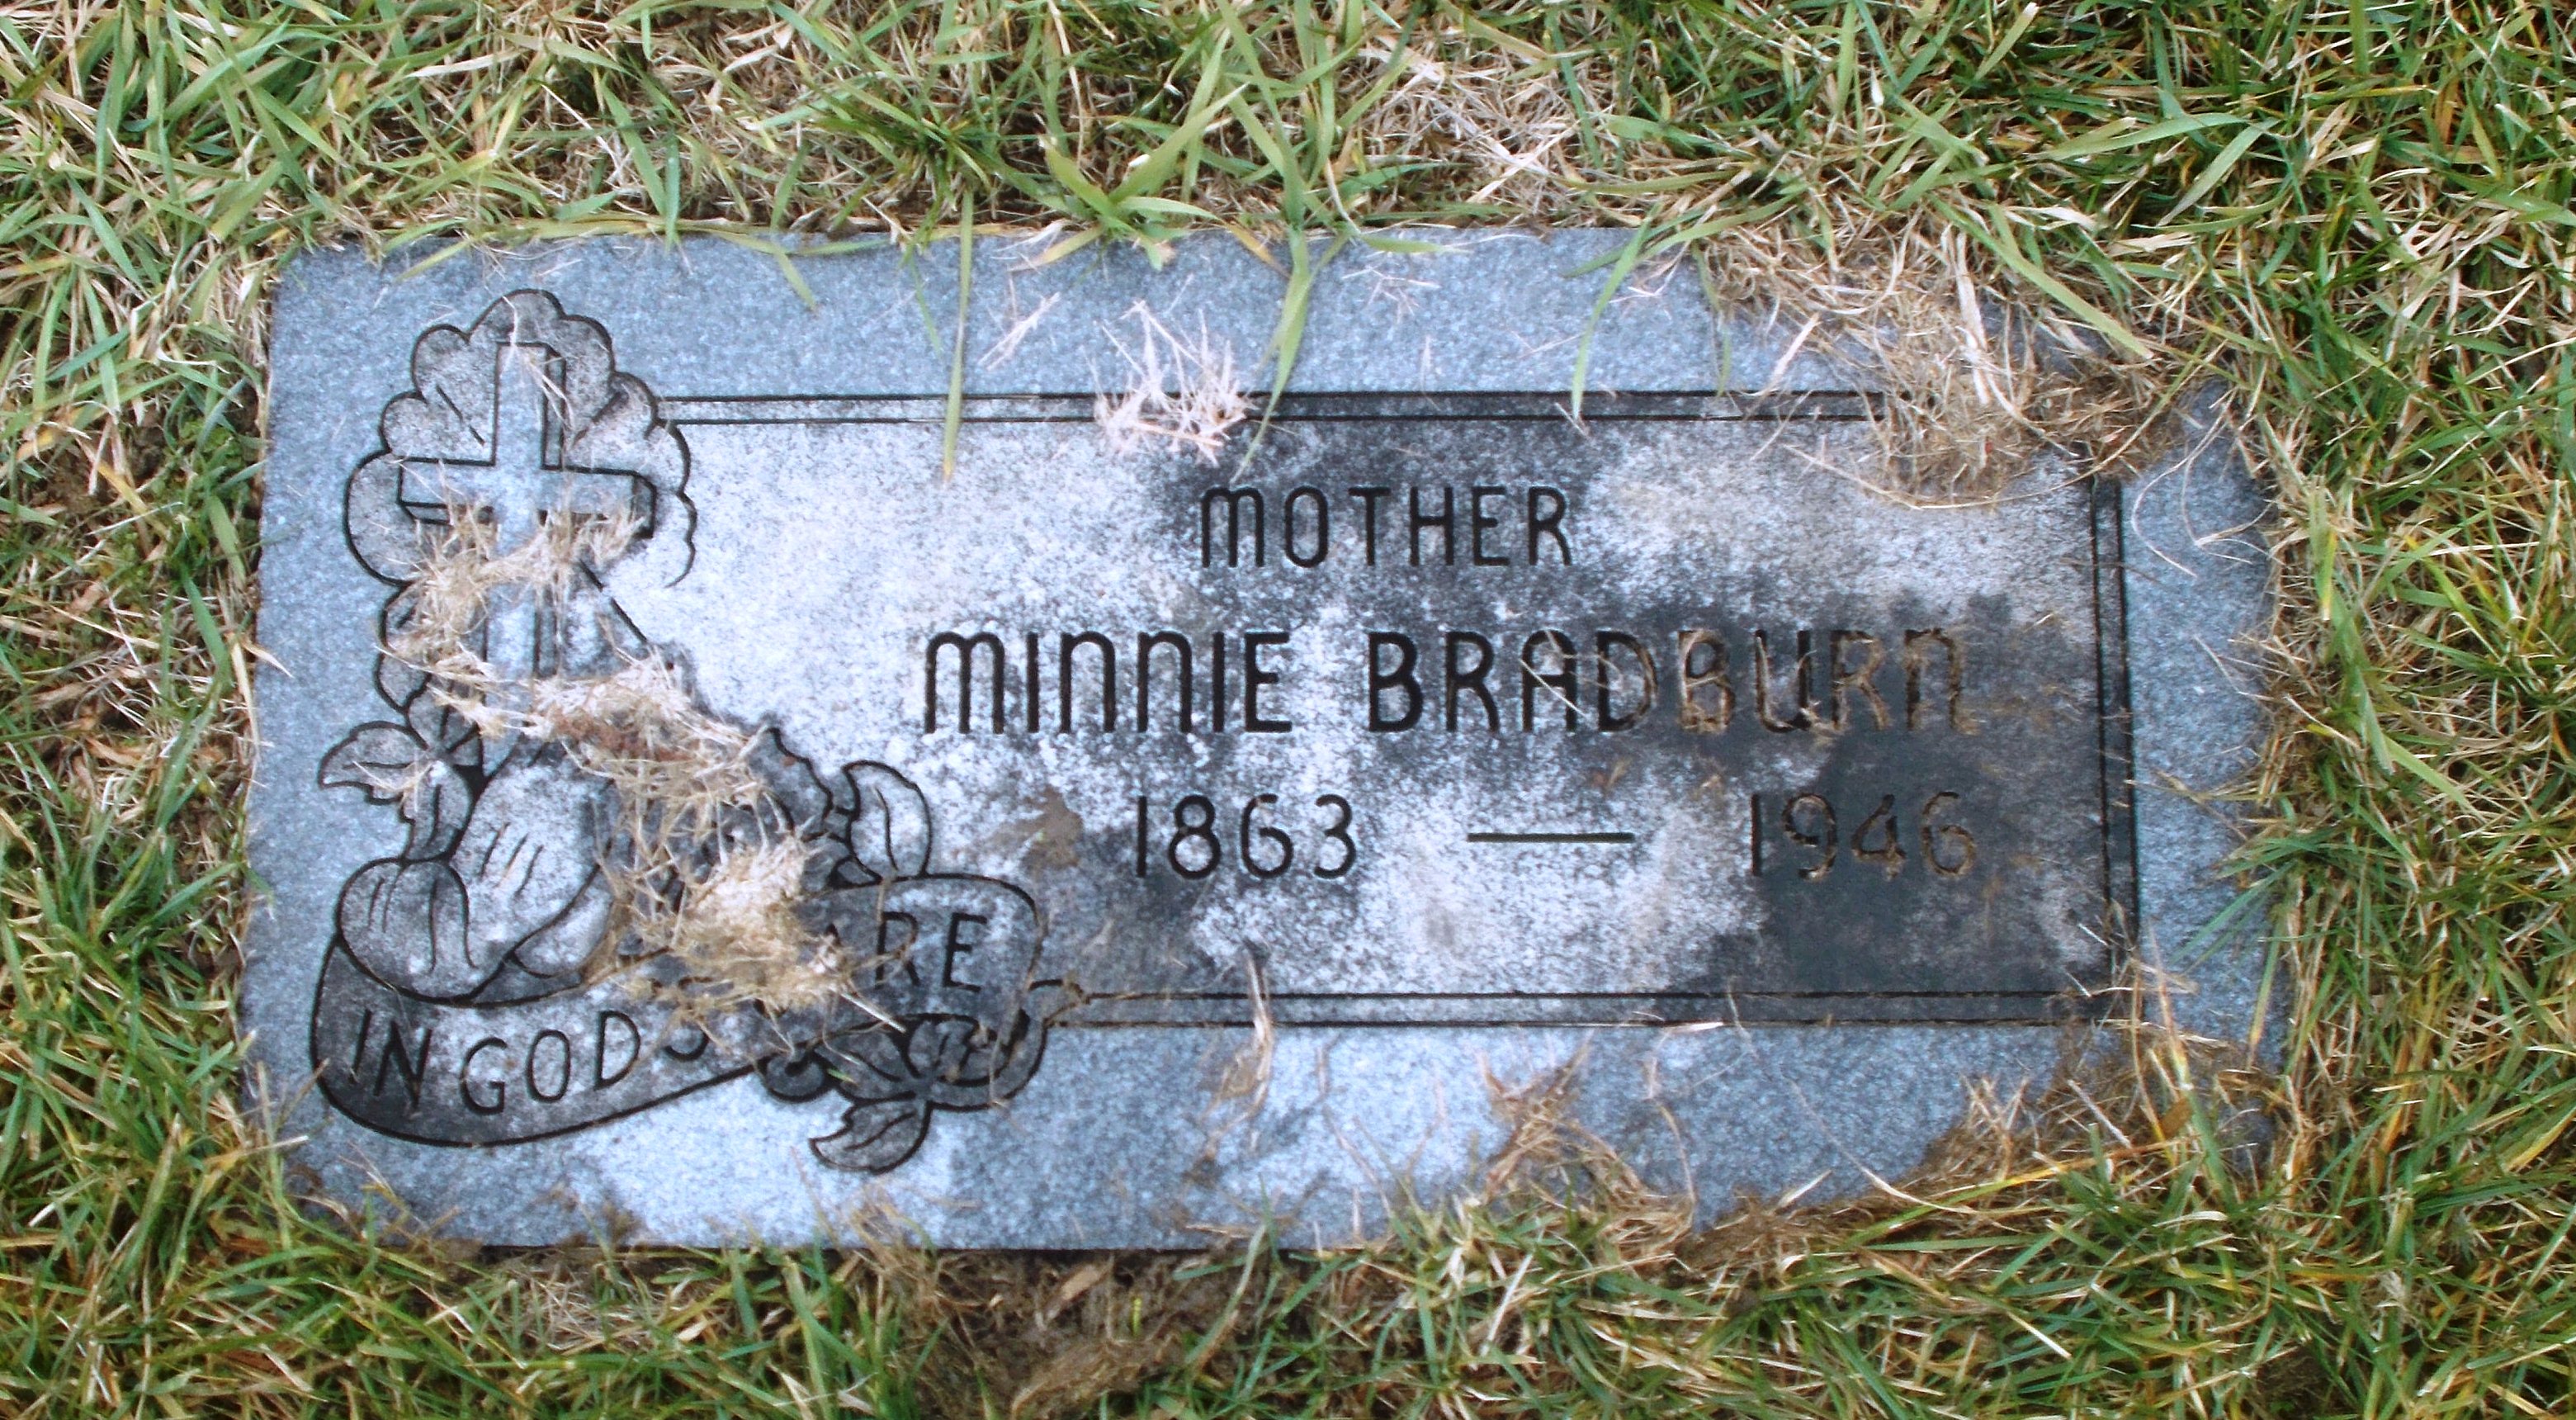 Minnie Bradburn